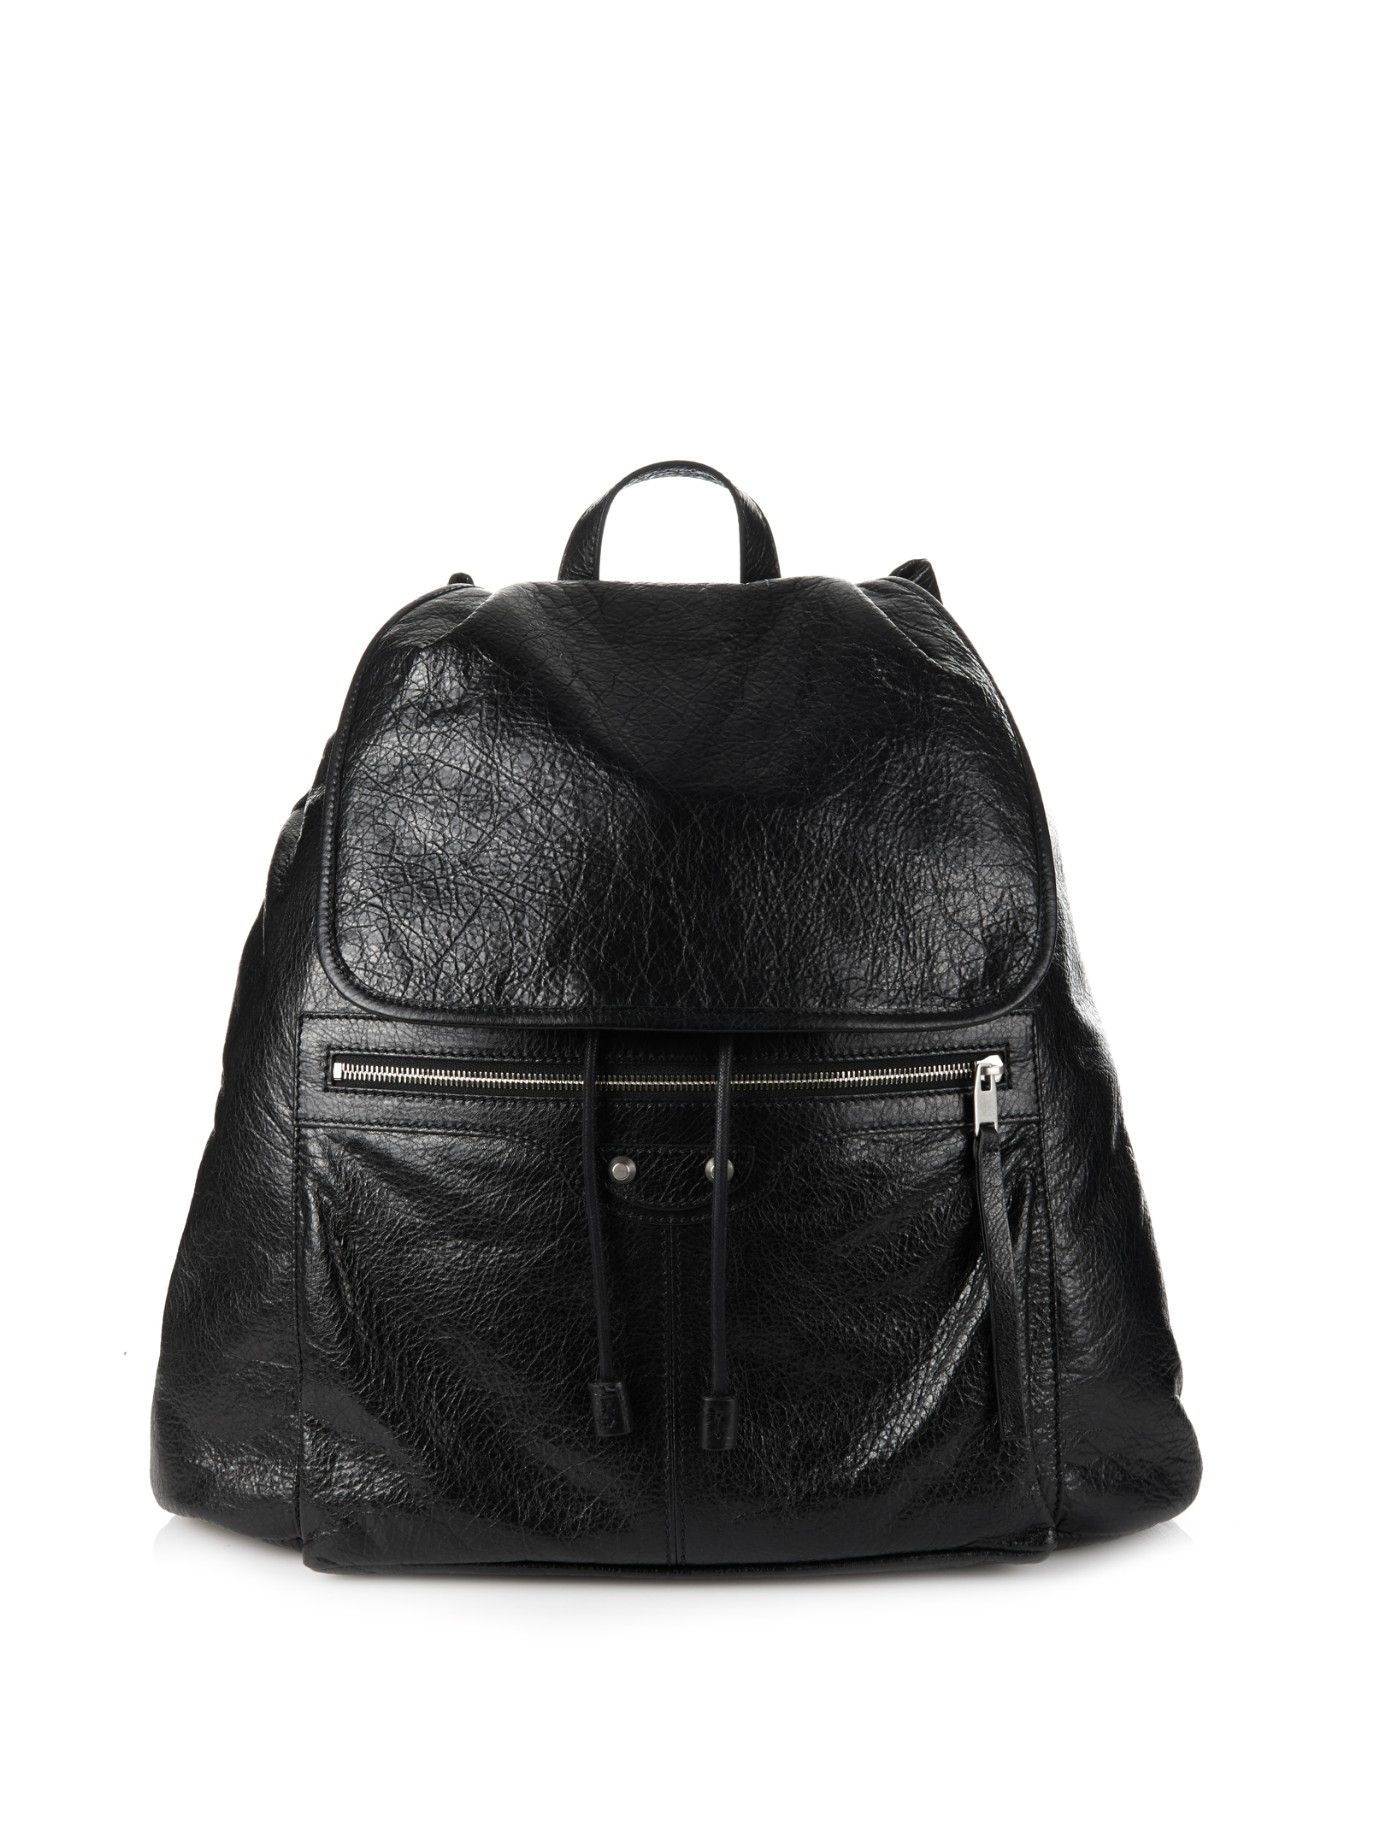 Balenciaga Leather Arena Traveller Backpack in Black for Men - Lyst